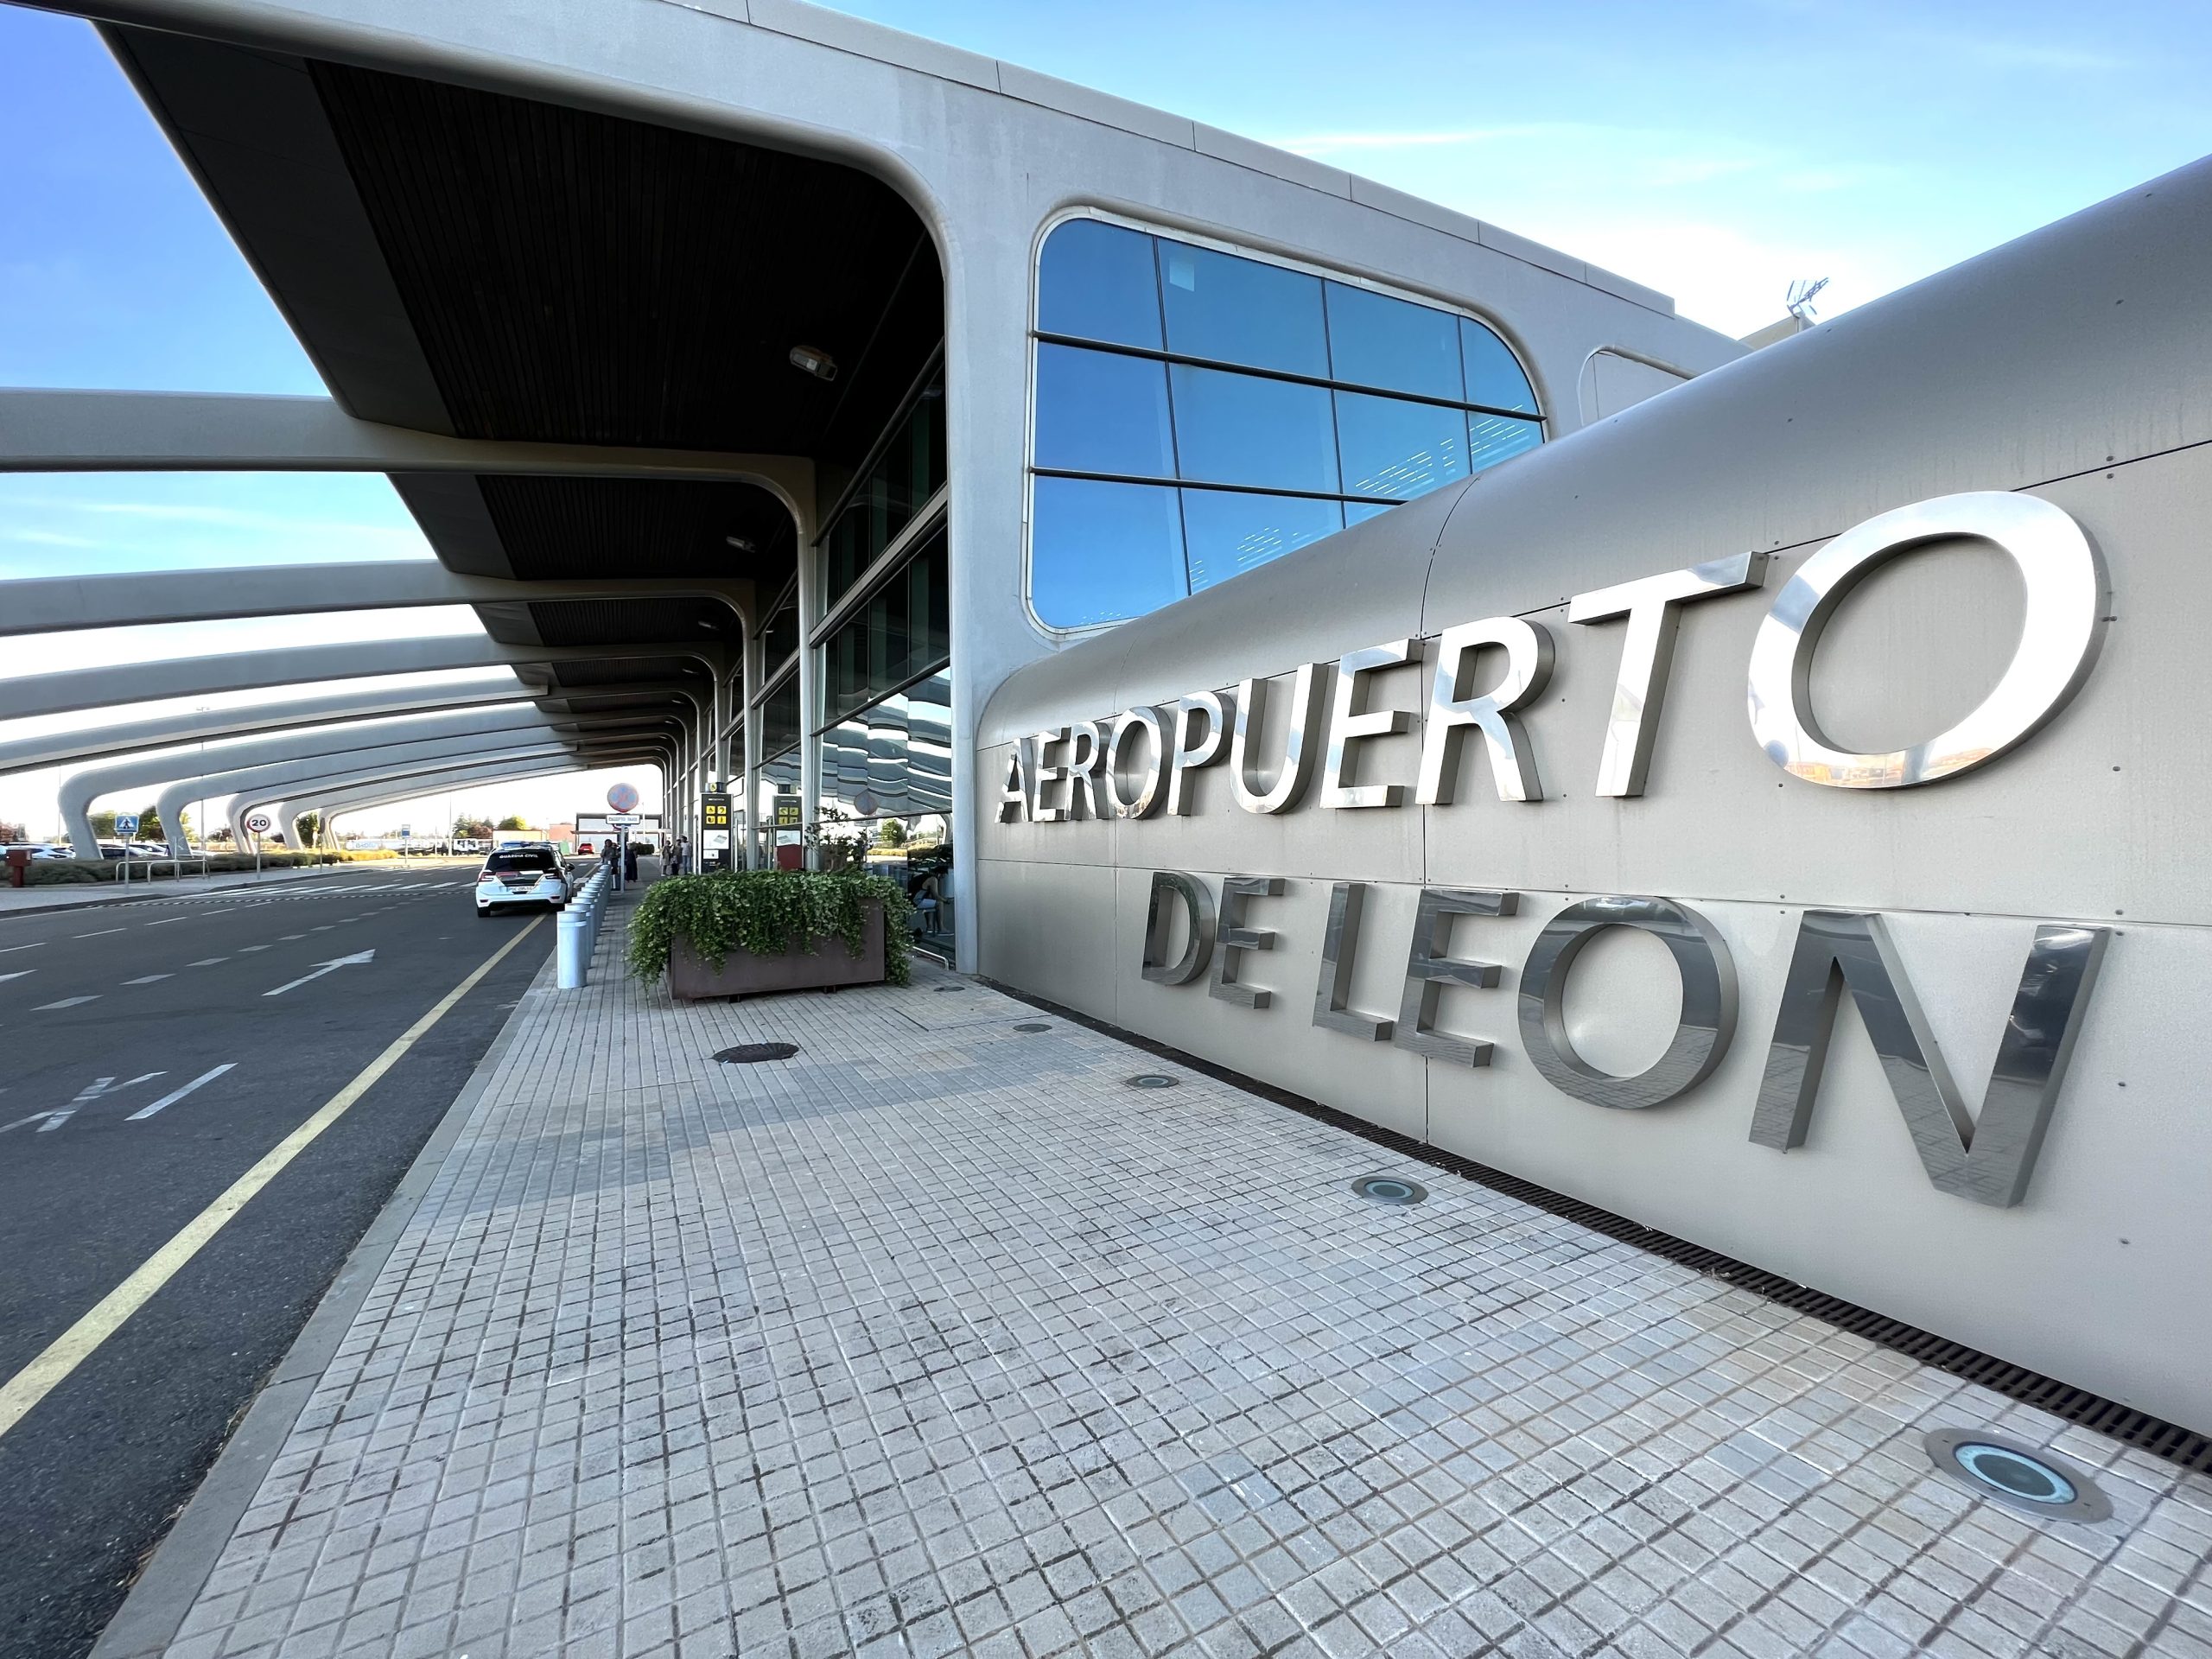 Aeropuerto de León. / EBD